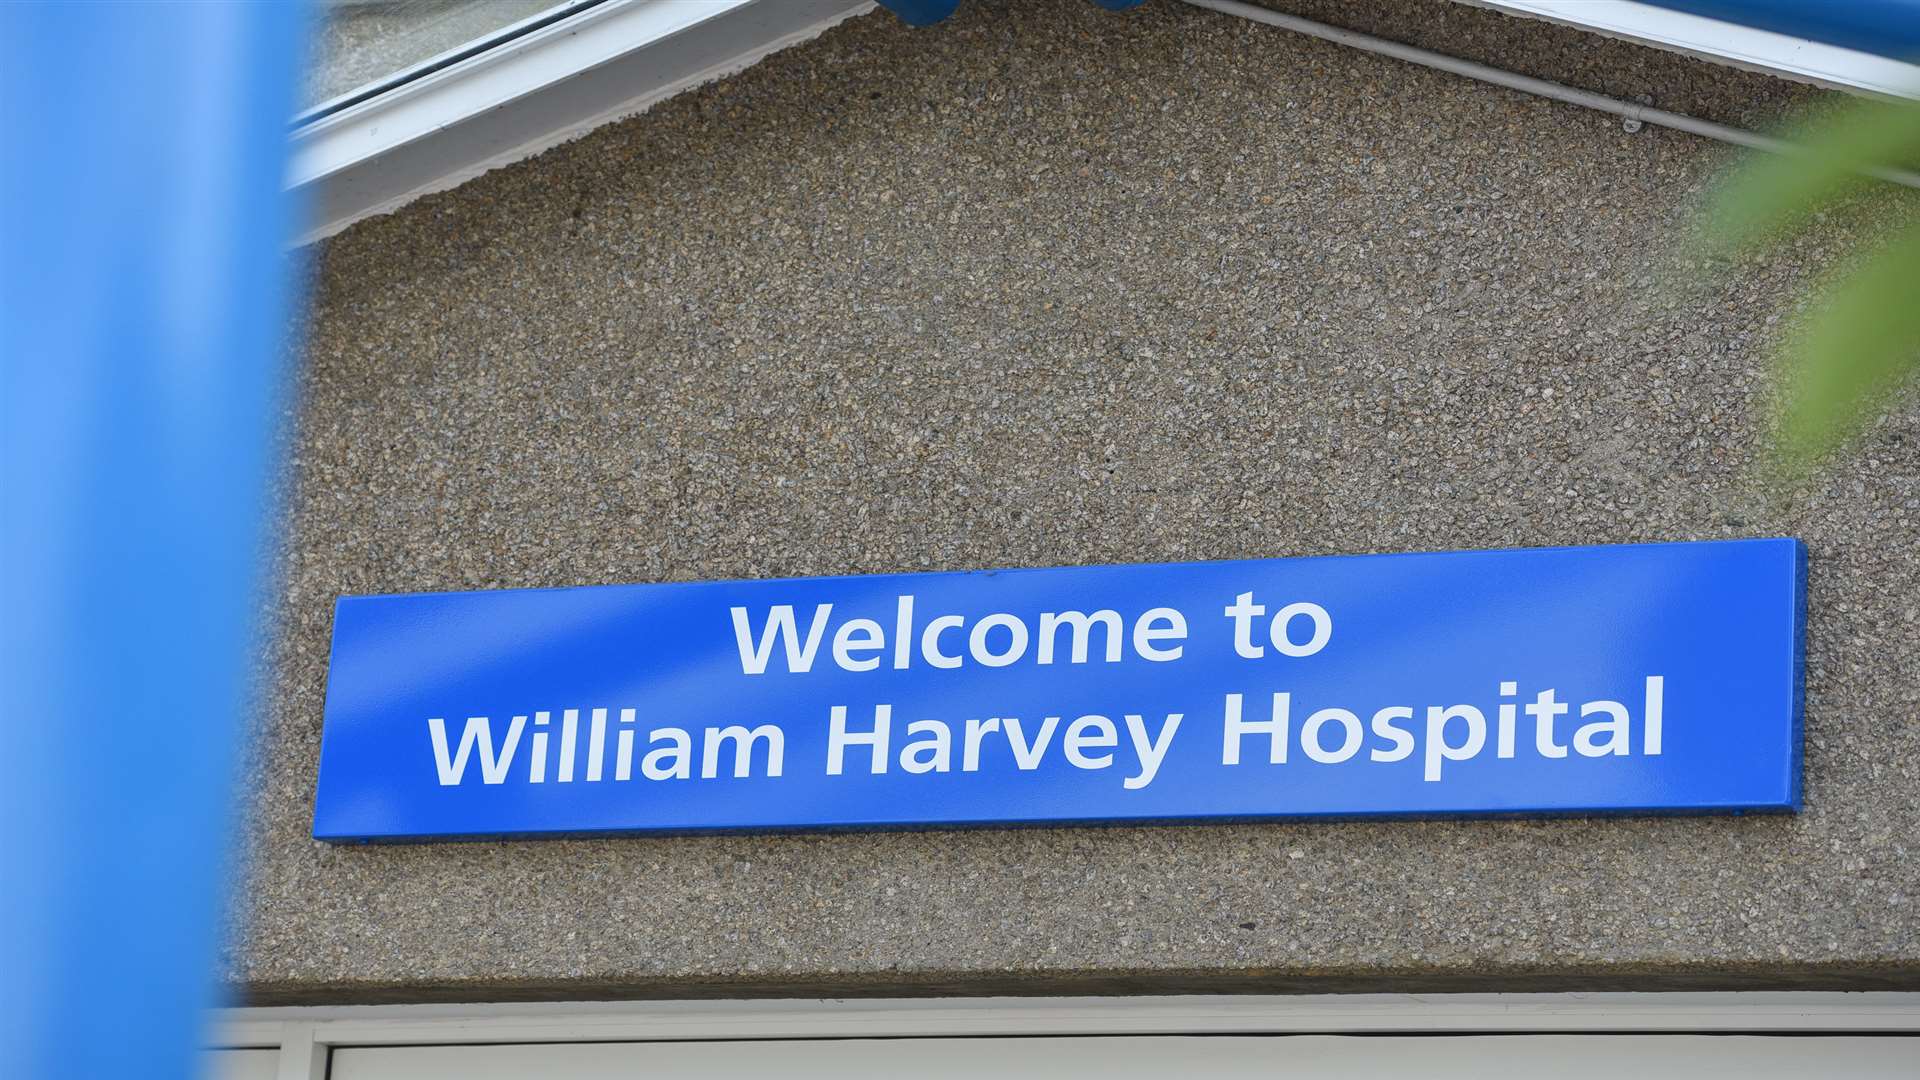 The William Harvey Hospital